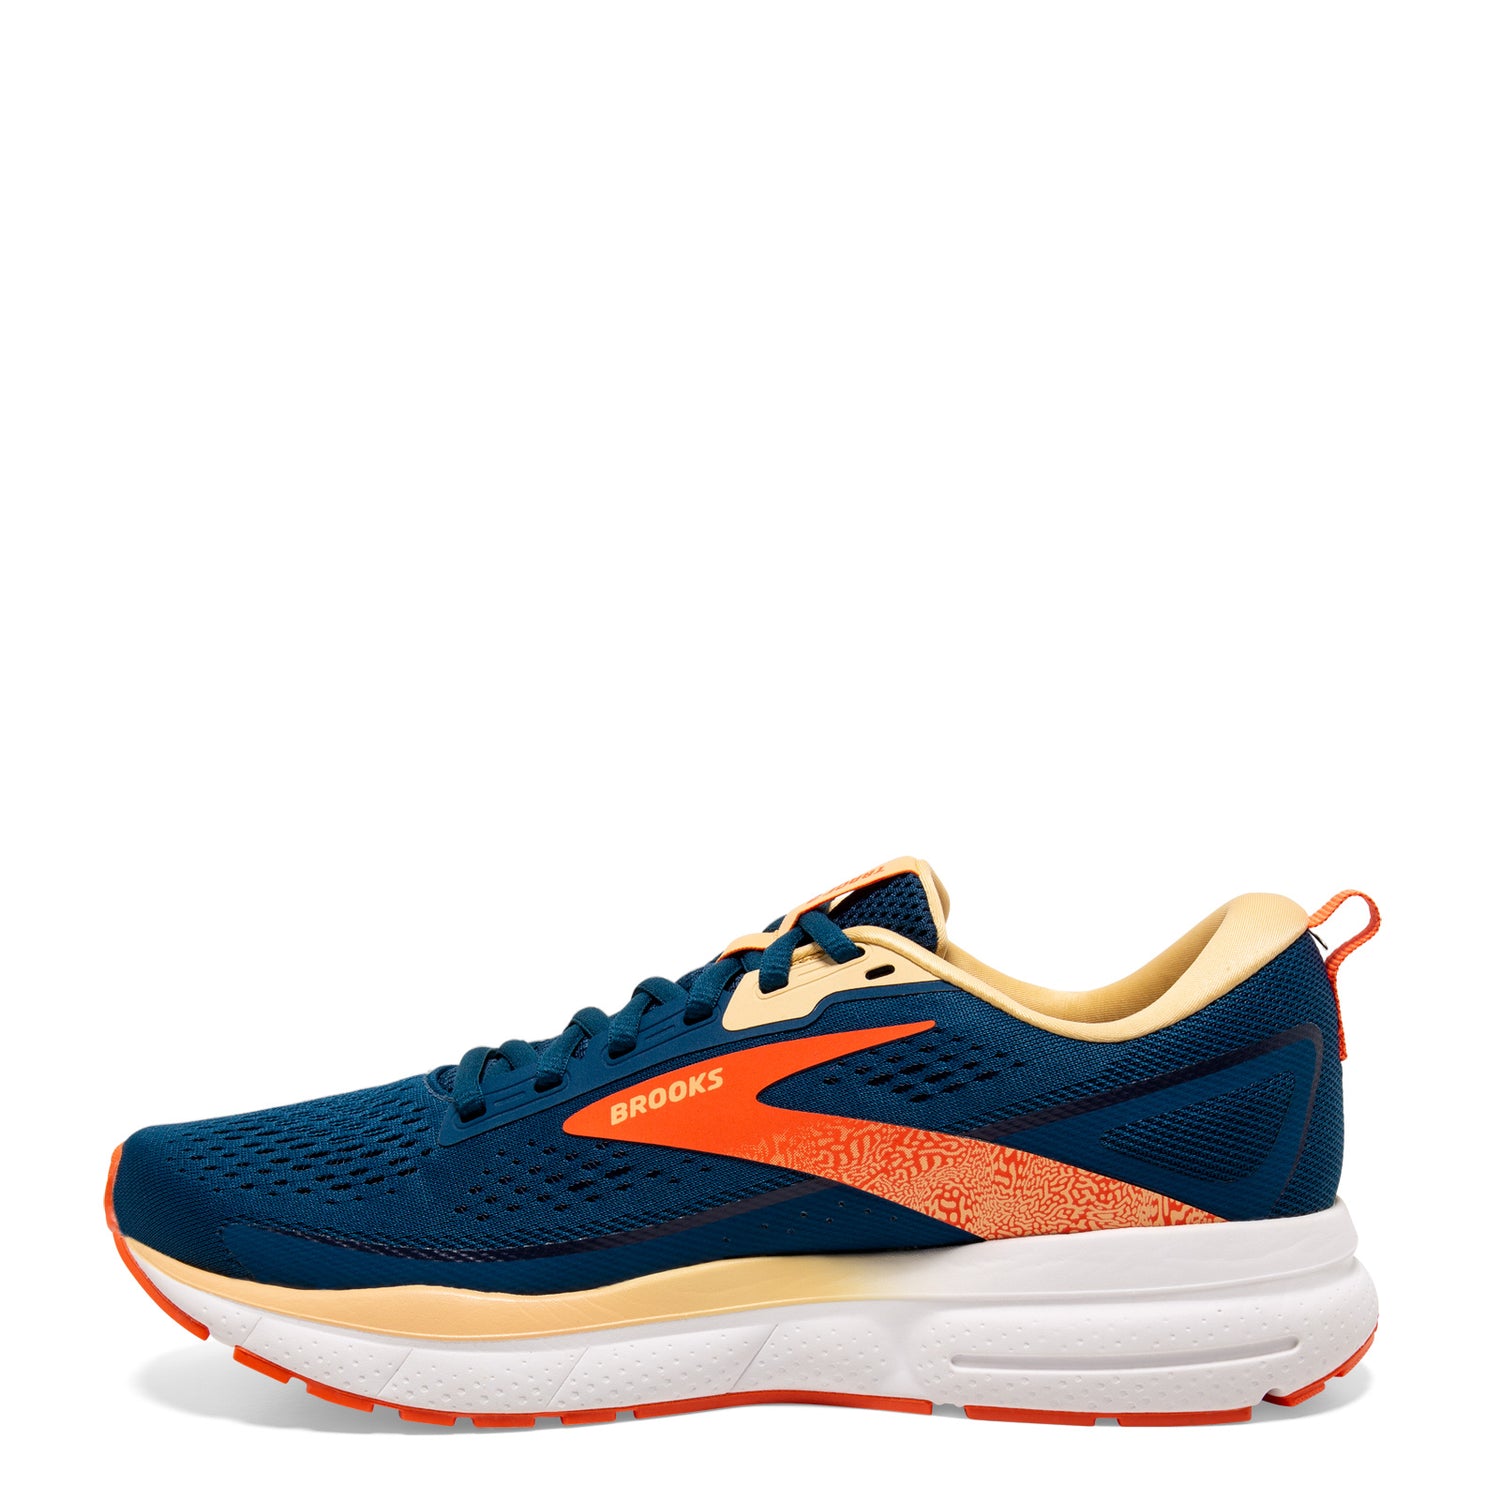 Peltz Shoes  Women's Brooks Trace 3 Running Shoe Blue/Nasturtium/Sunburst 120401 1B 487